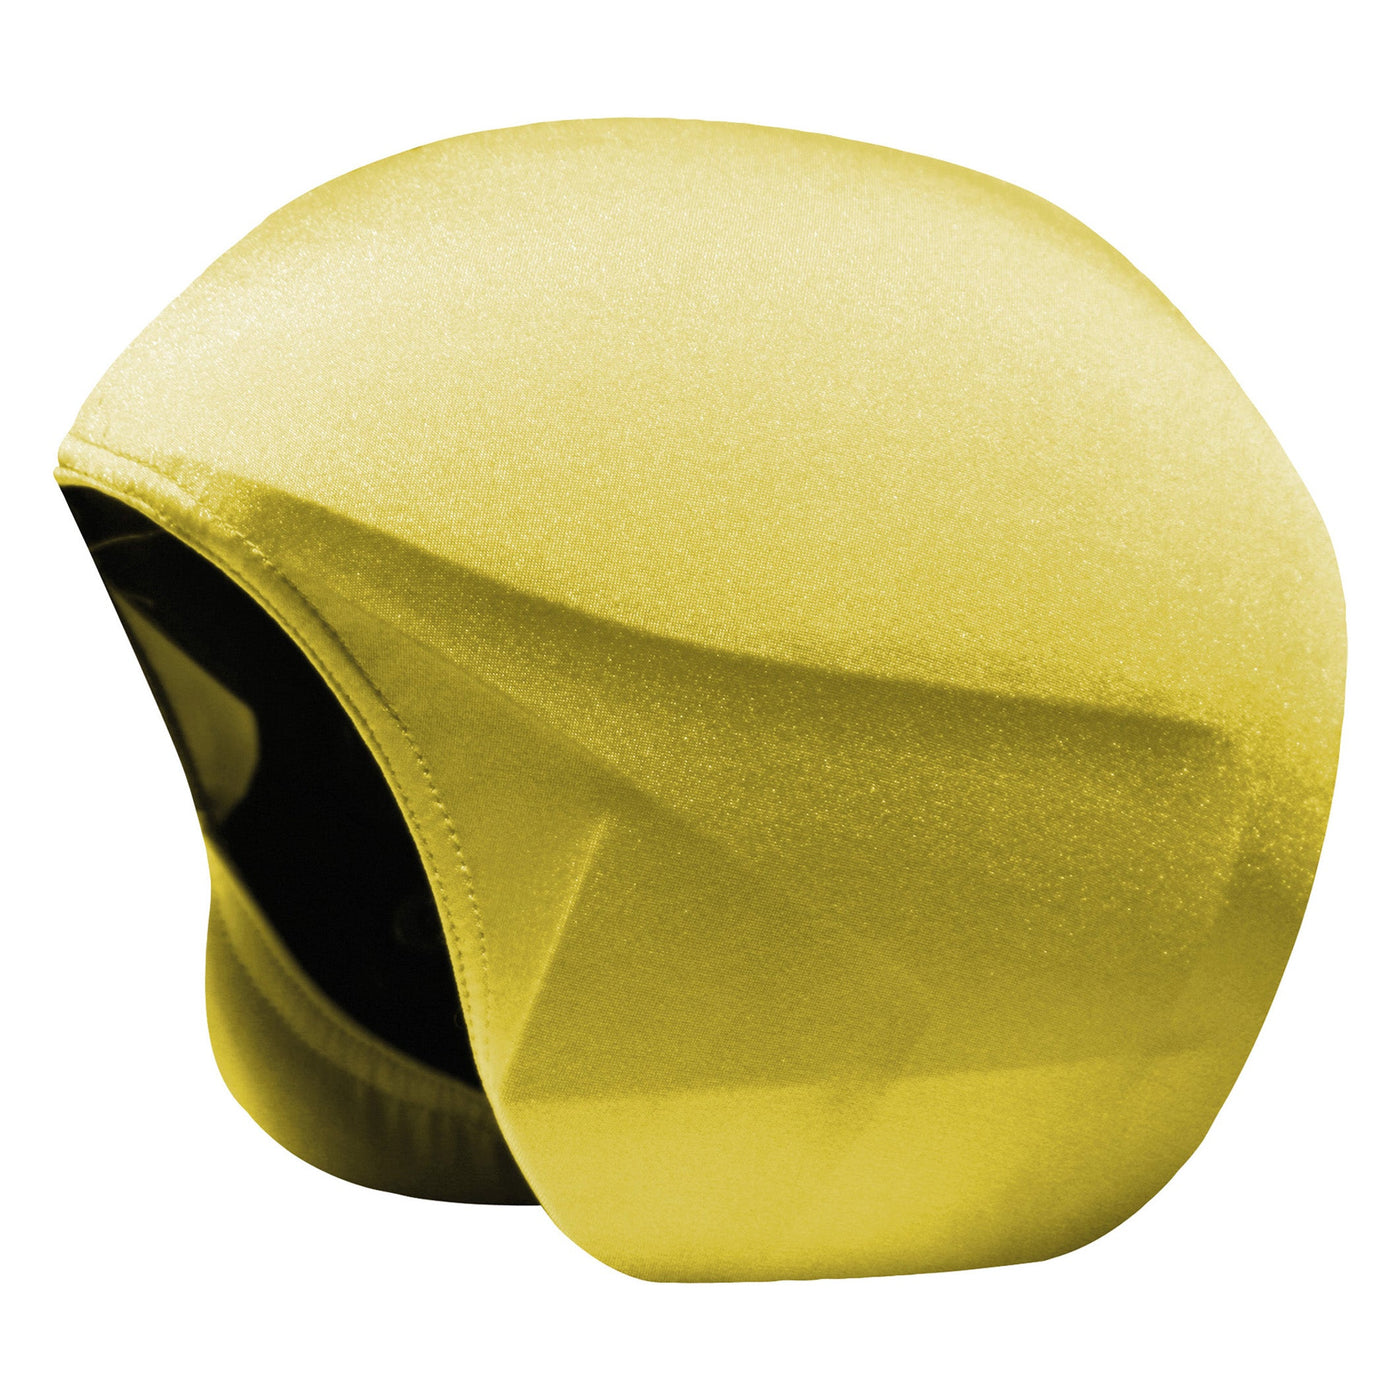 Coolcasc Groups Helmet Cover Yellow